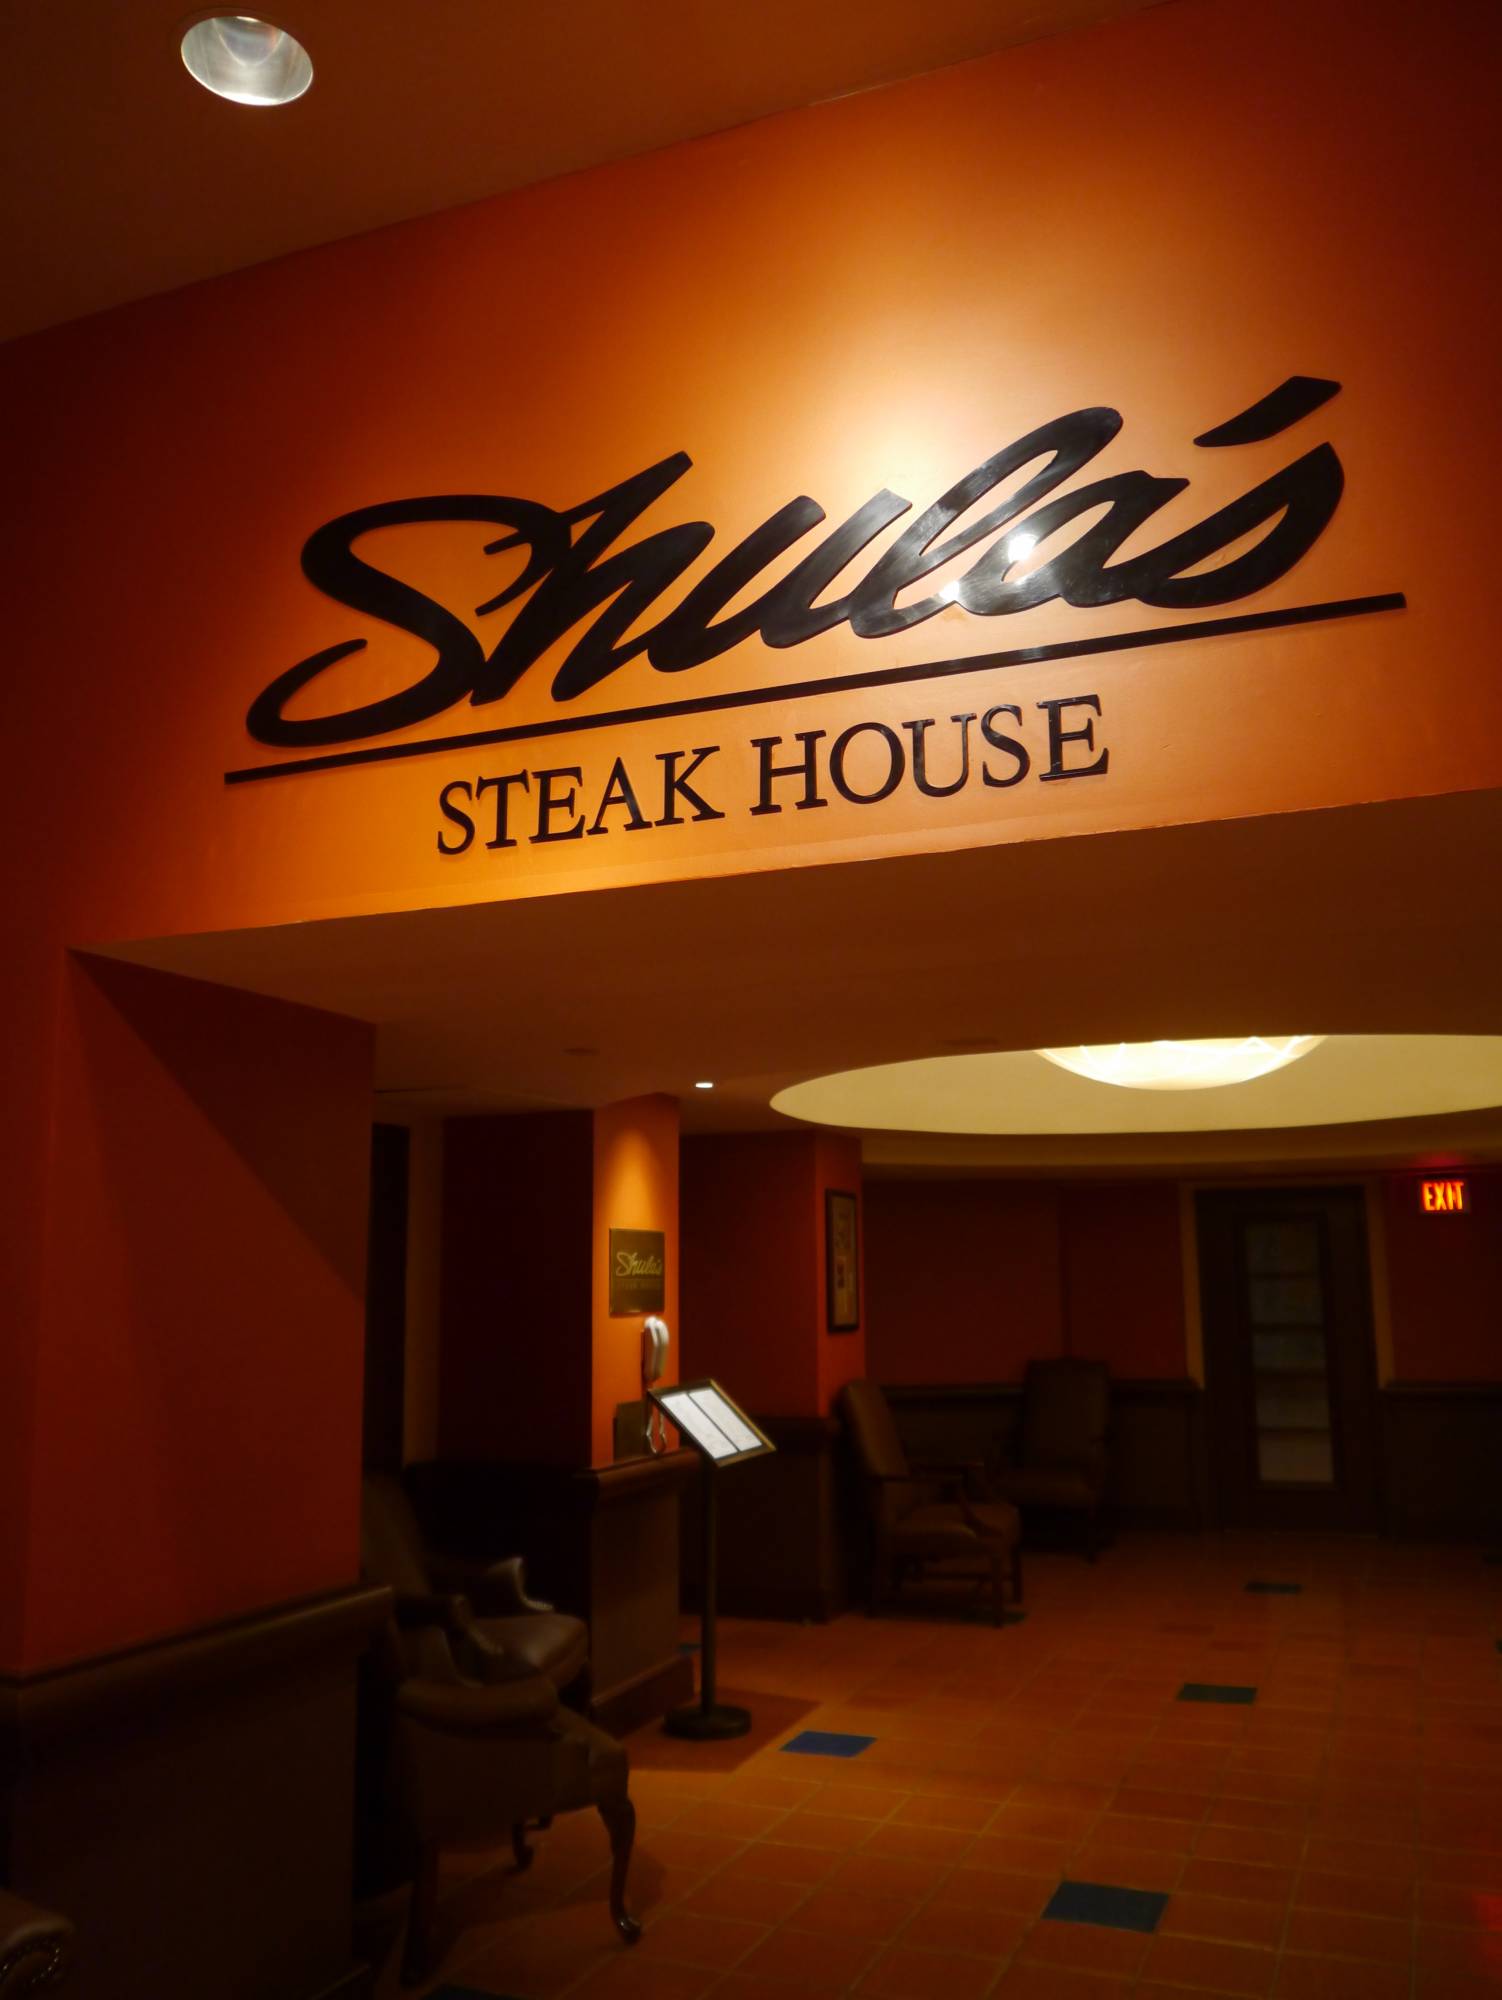 Dolphin - Shula's Steak House